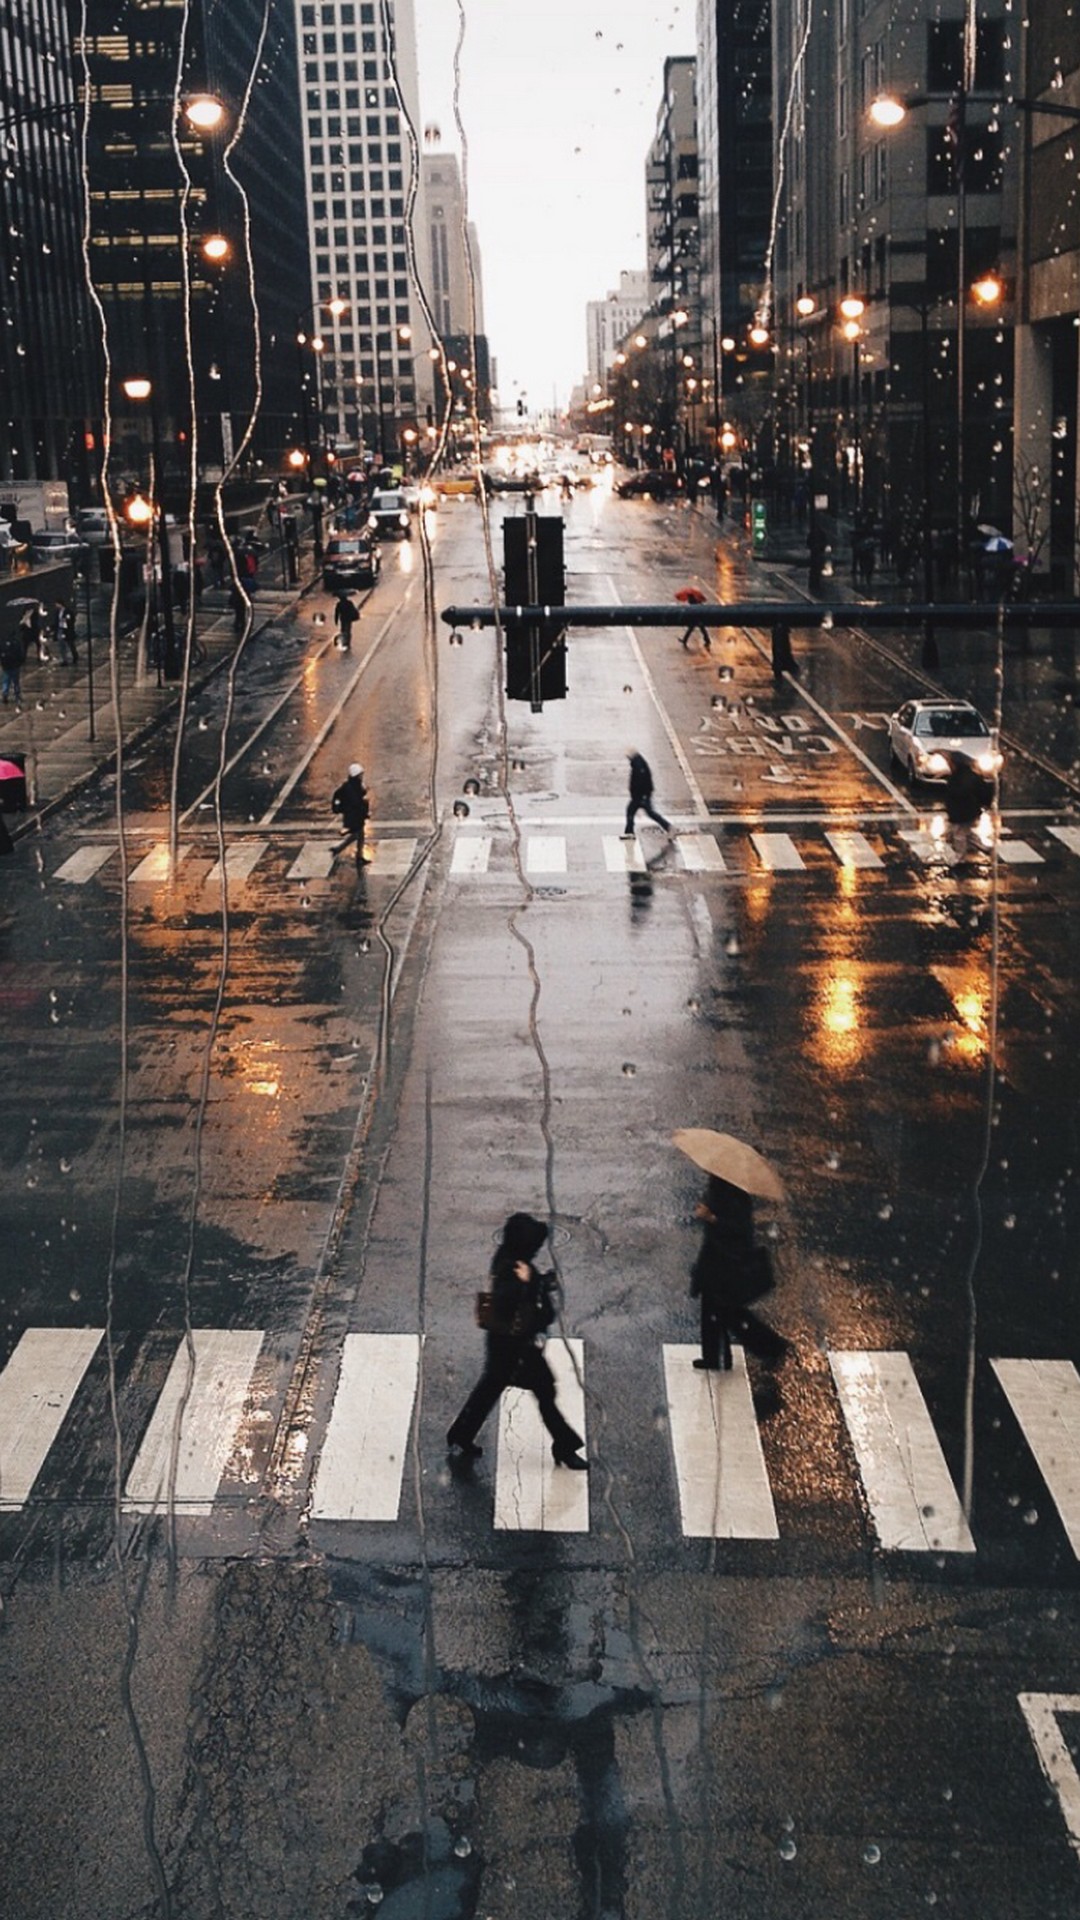 Rainy City iPhone 6 Wallpaper resolution 1080x1920